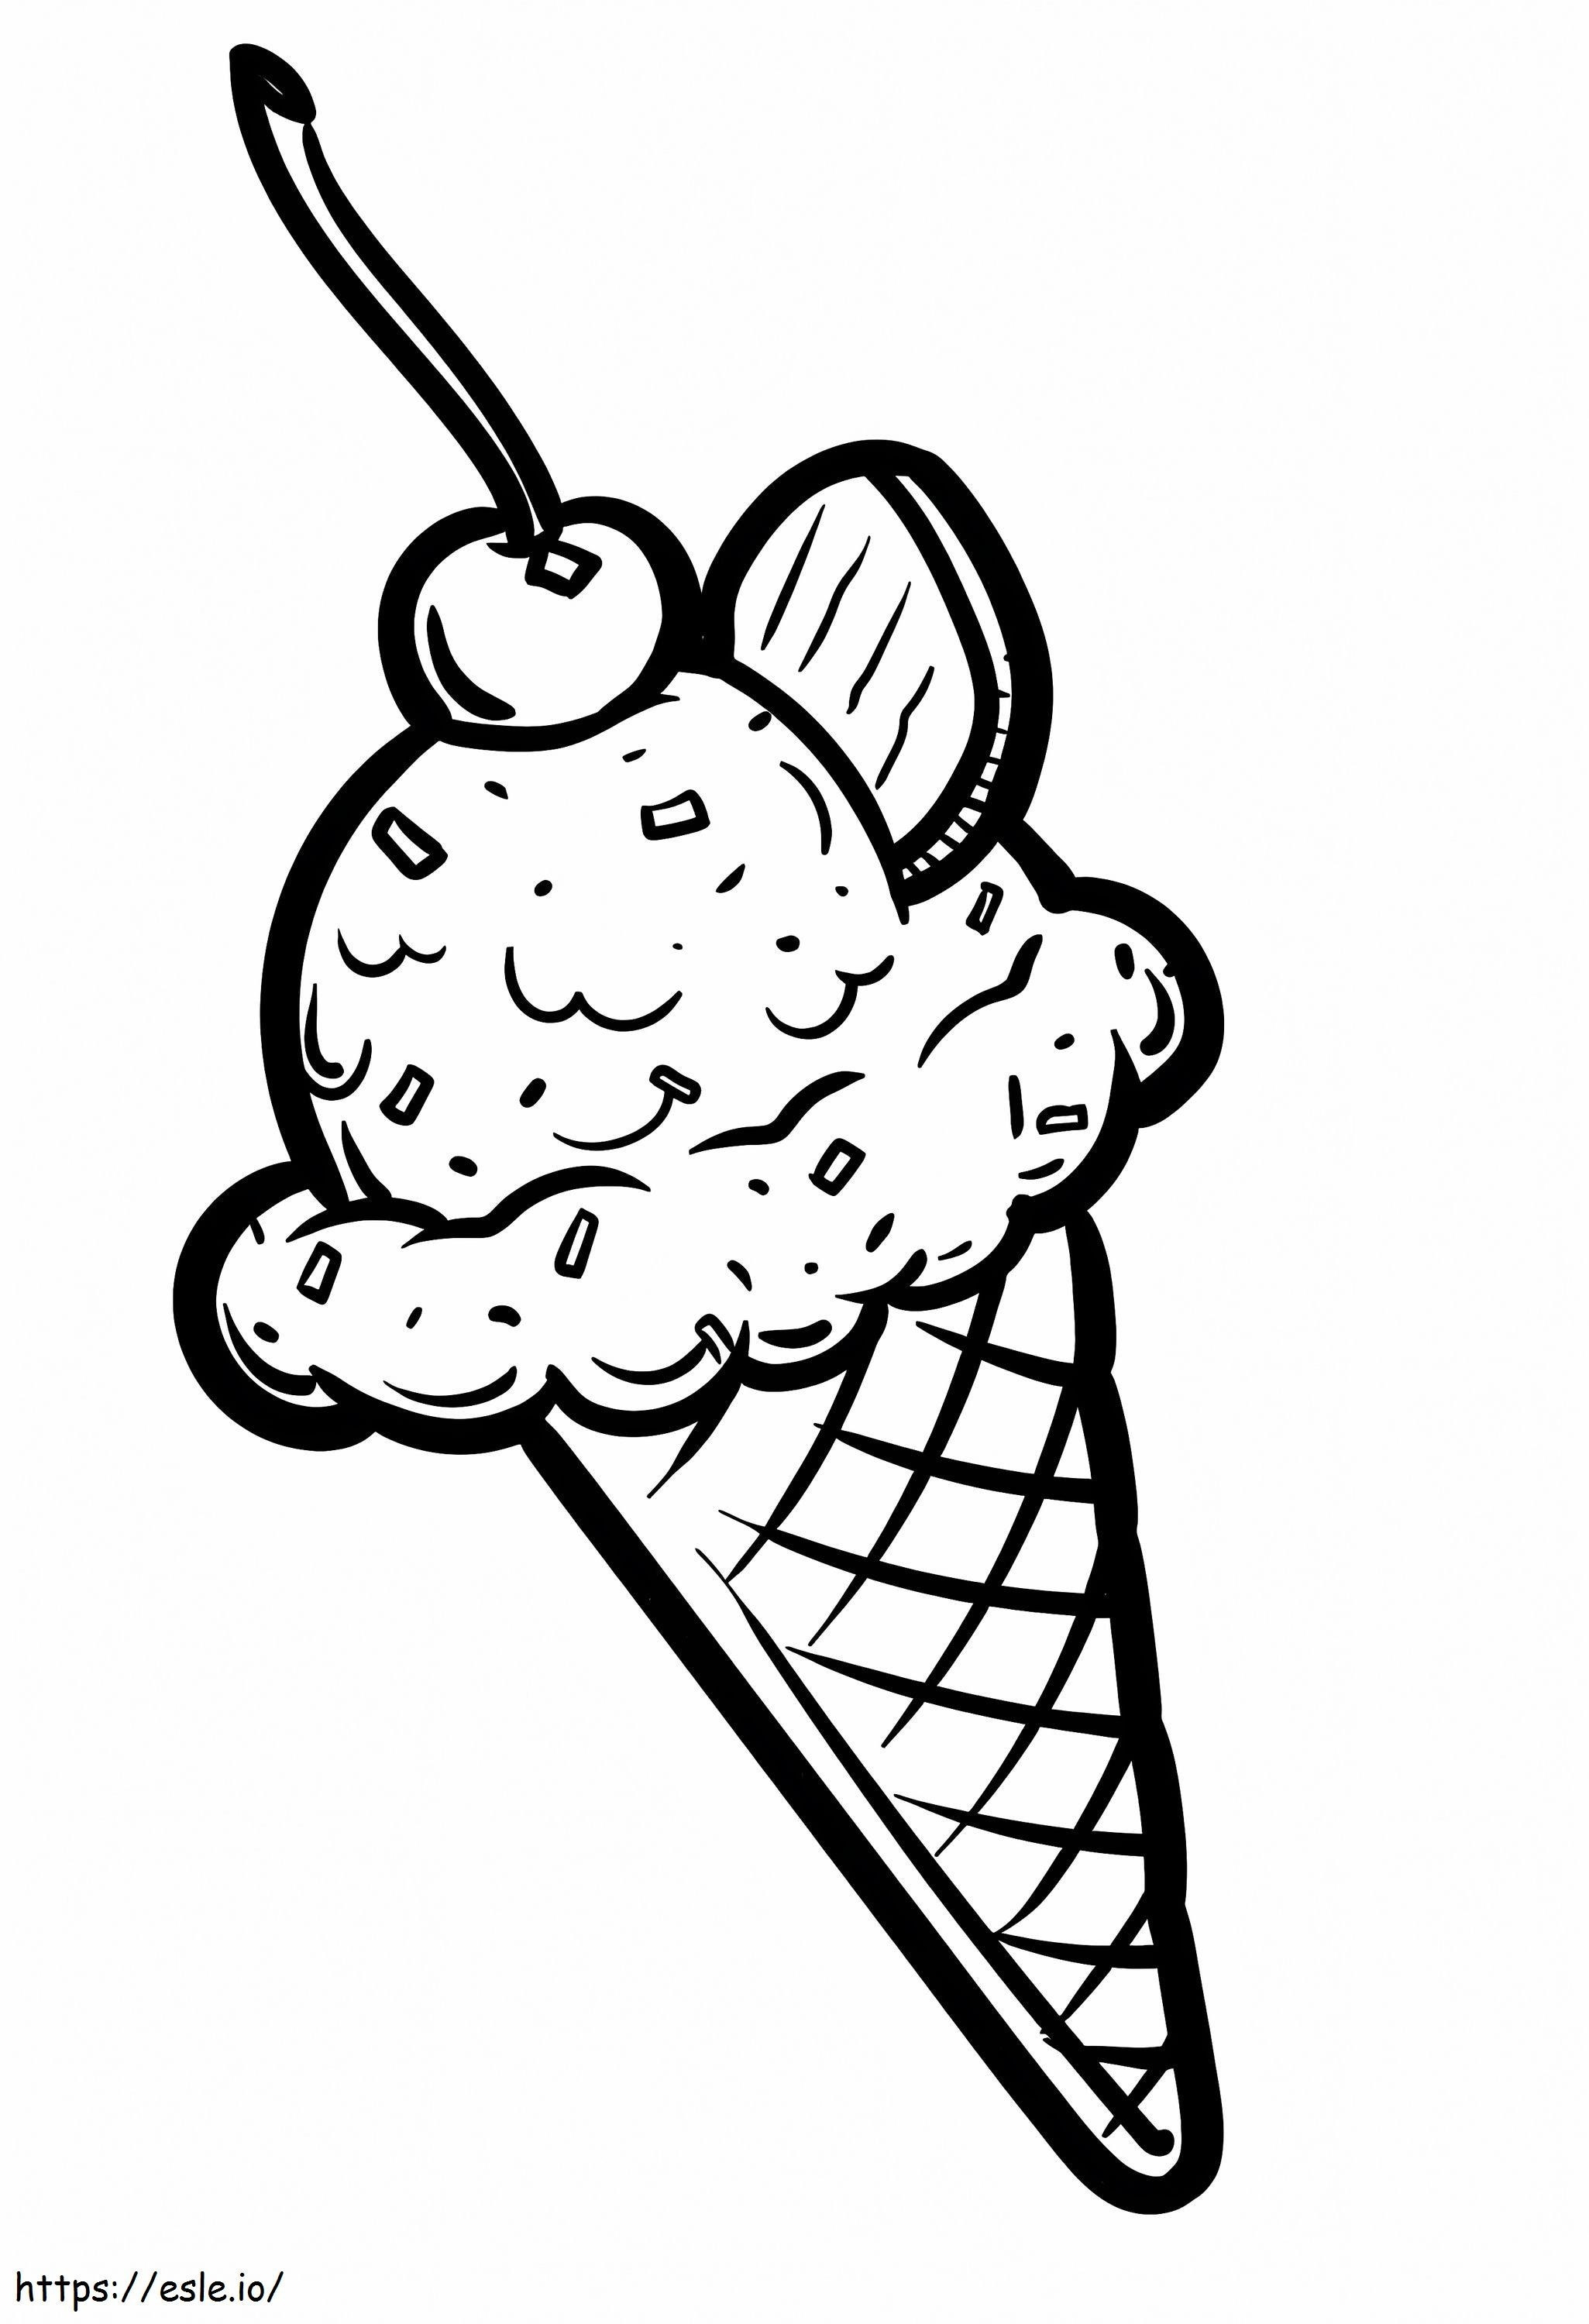 Dessert Ice Cream coloring page